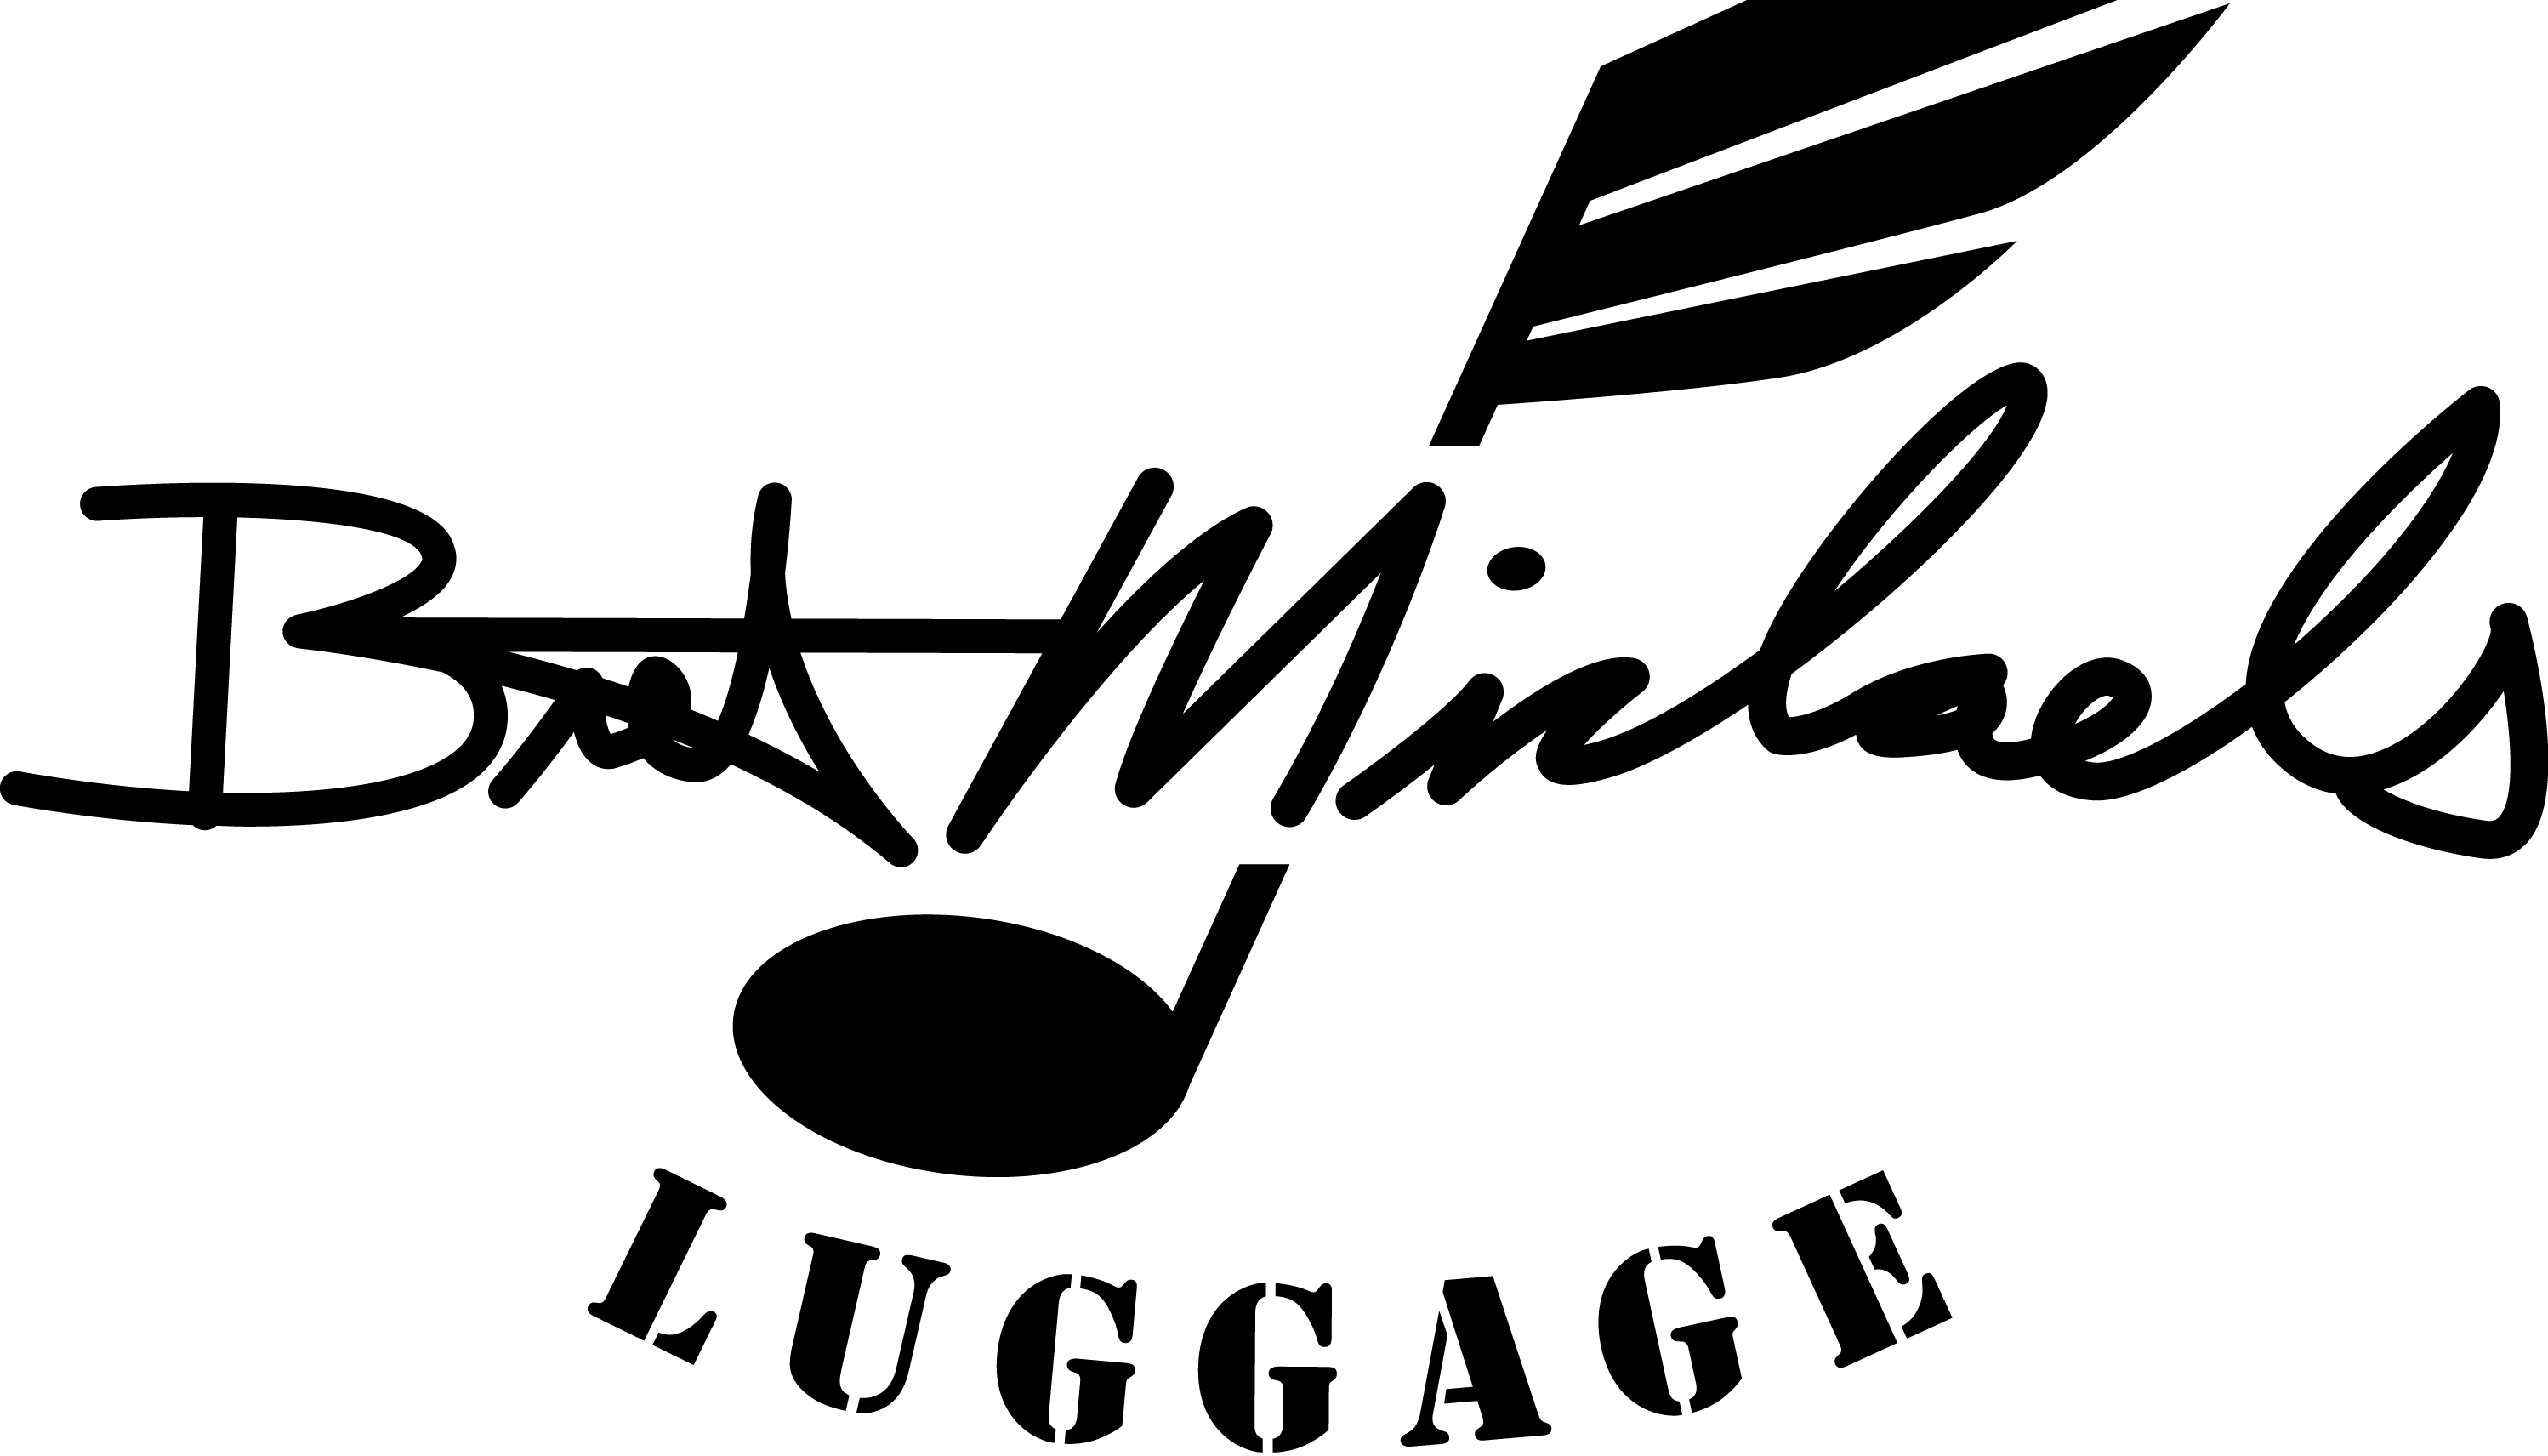 Michaels Art Logo - Bret Michaels Luggage banner logo | Traveler's Choice